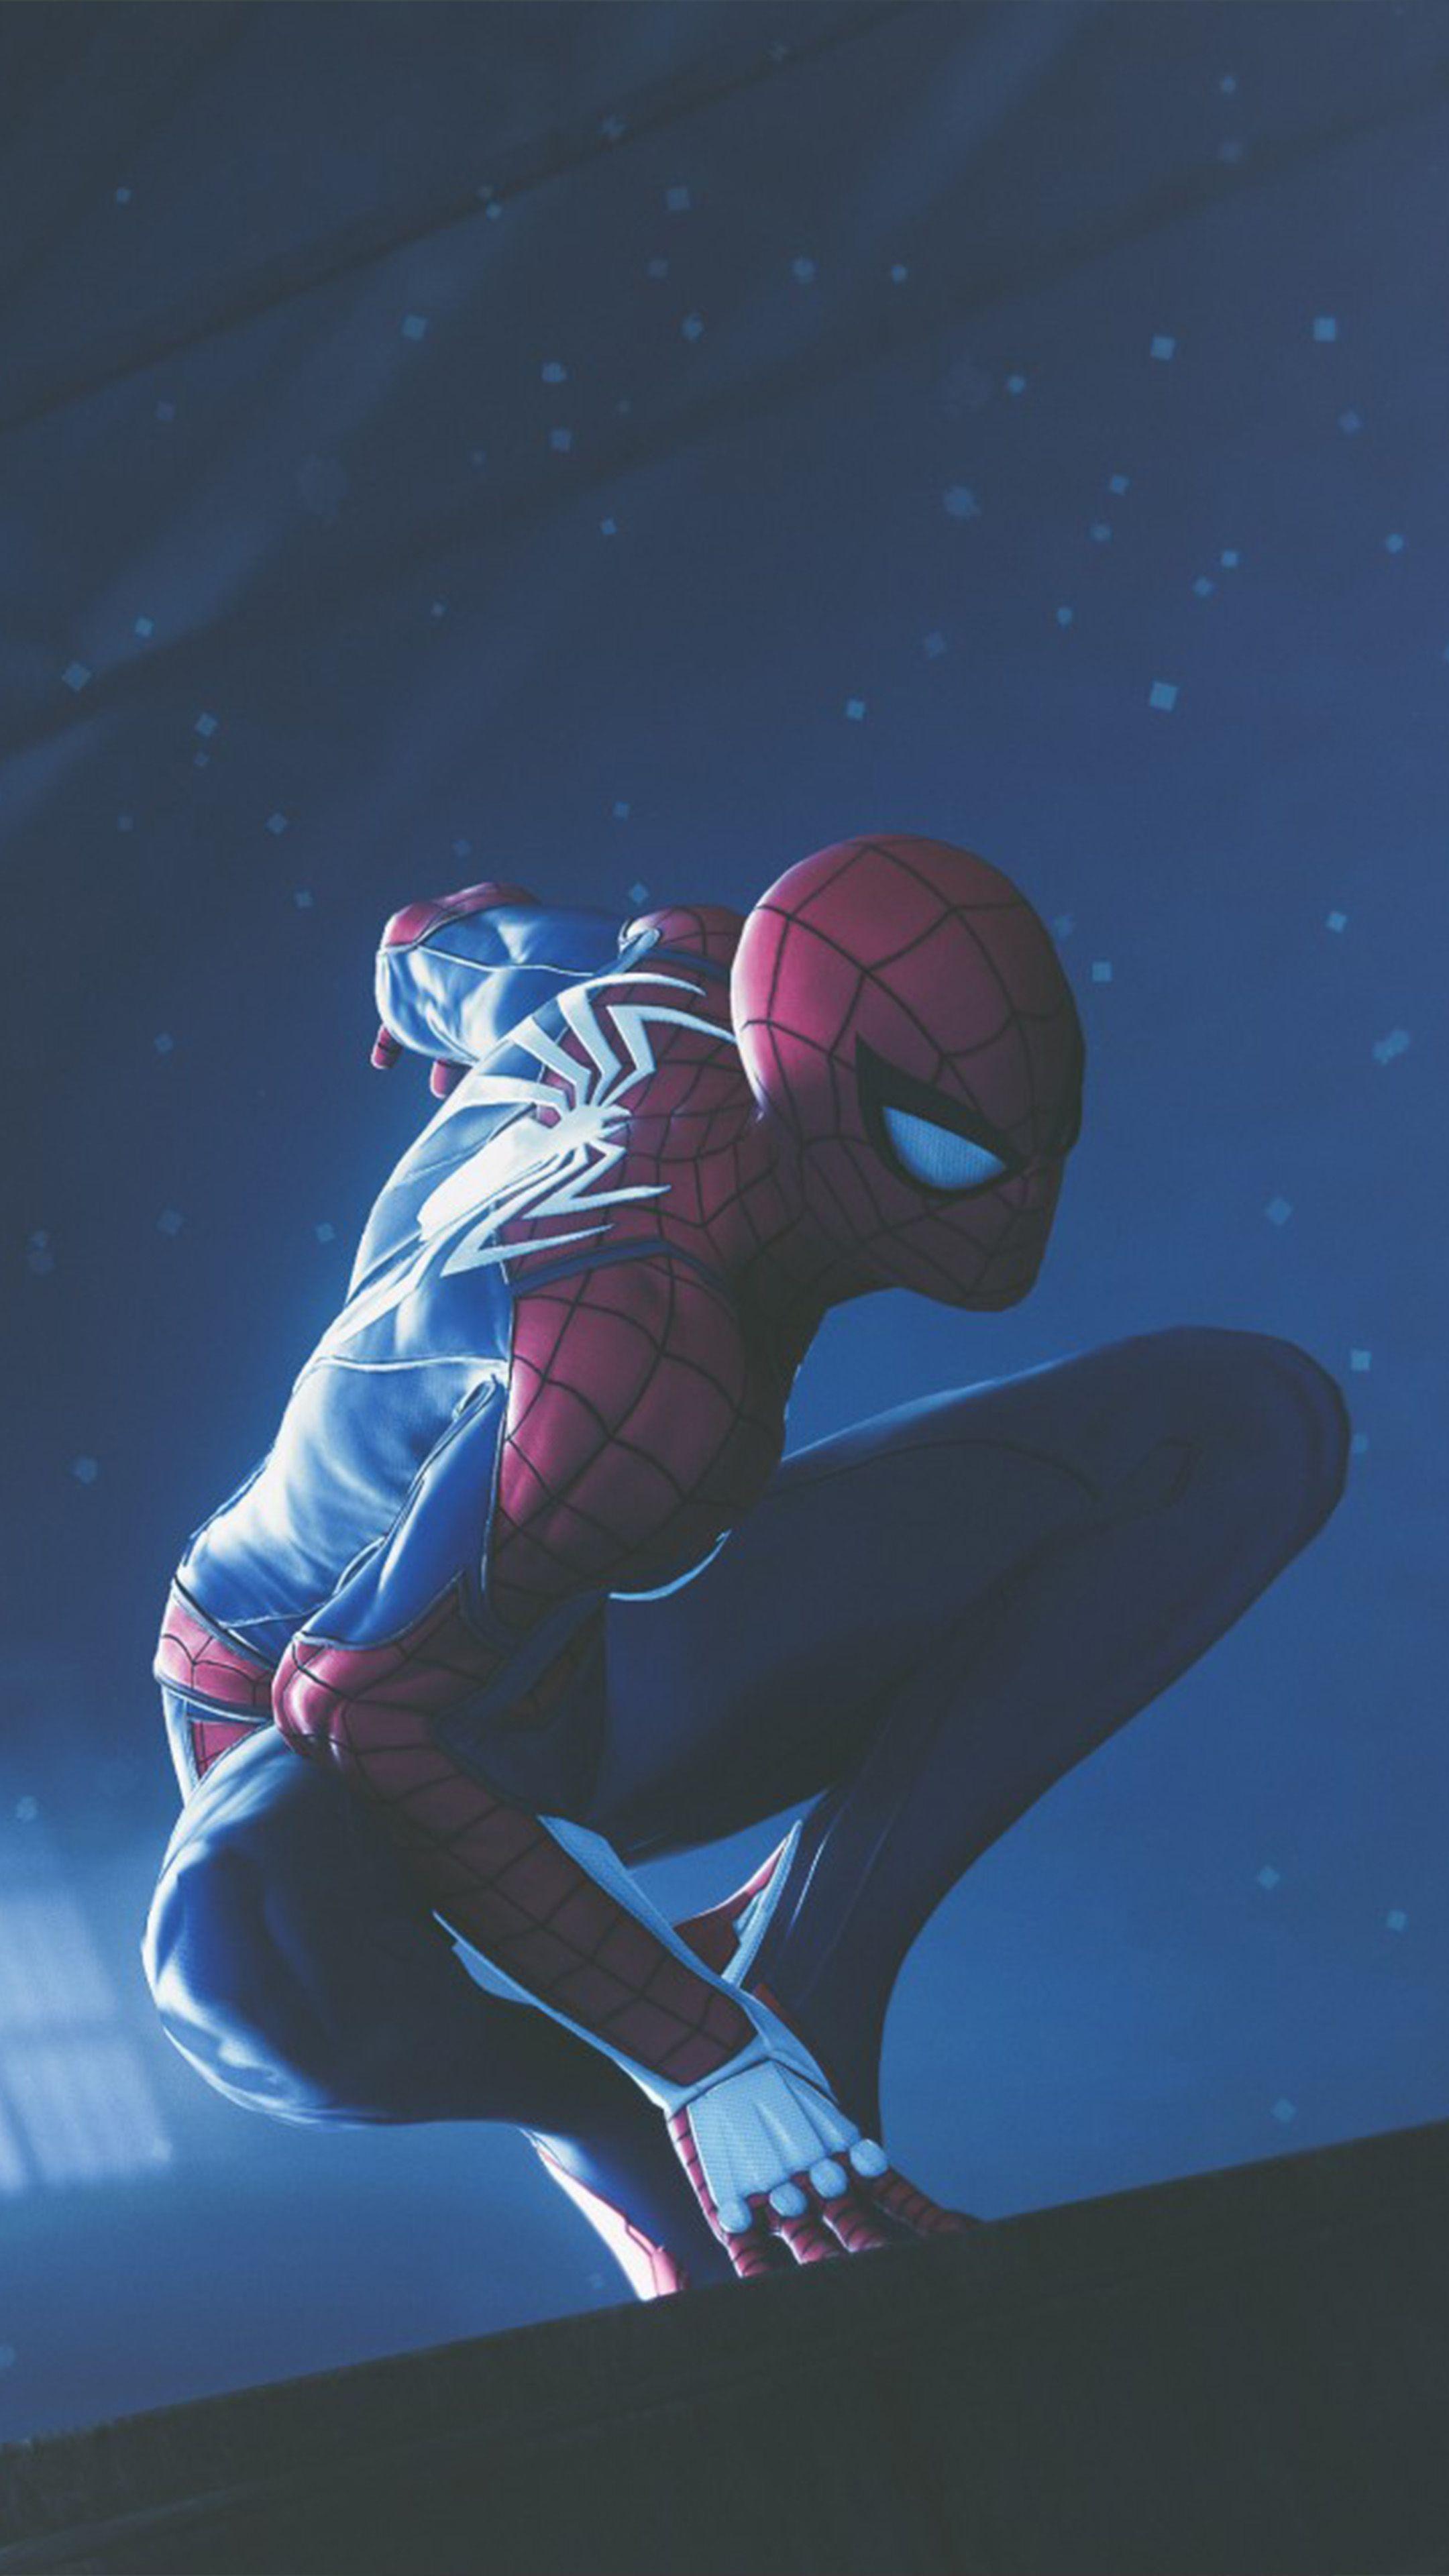 Spider Man PS4 Wallpapers HD - PixelsTalk.Net